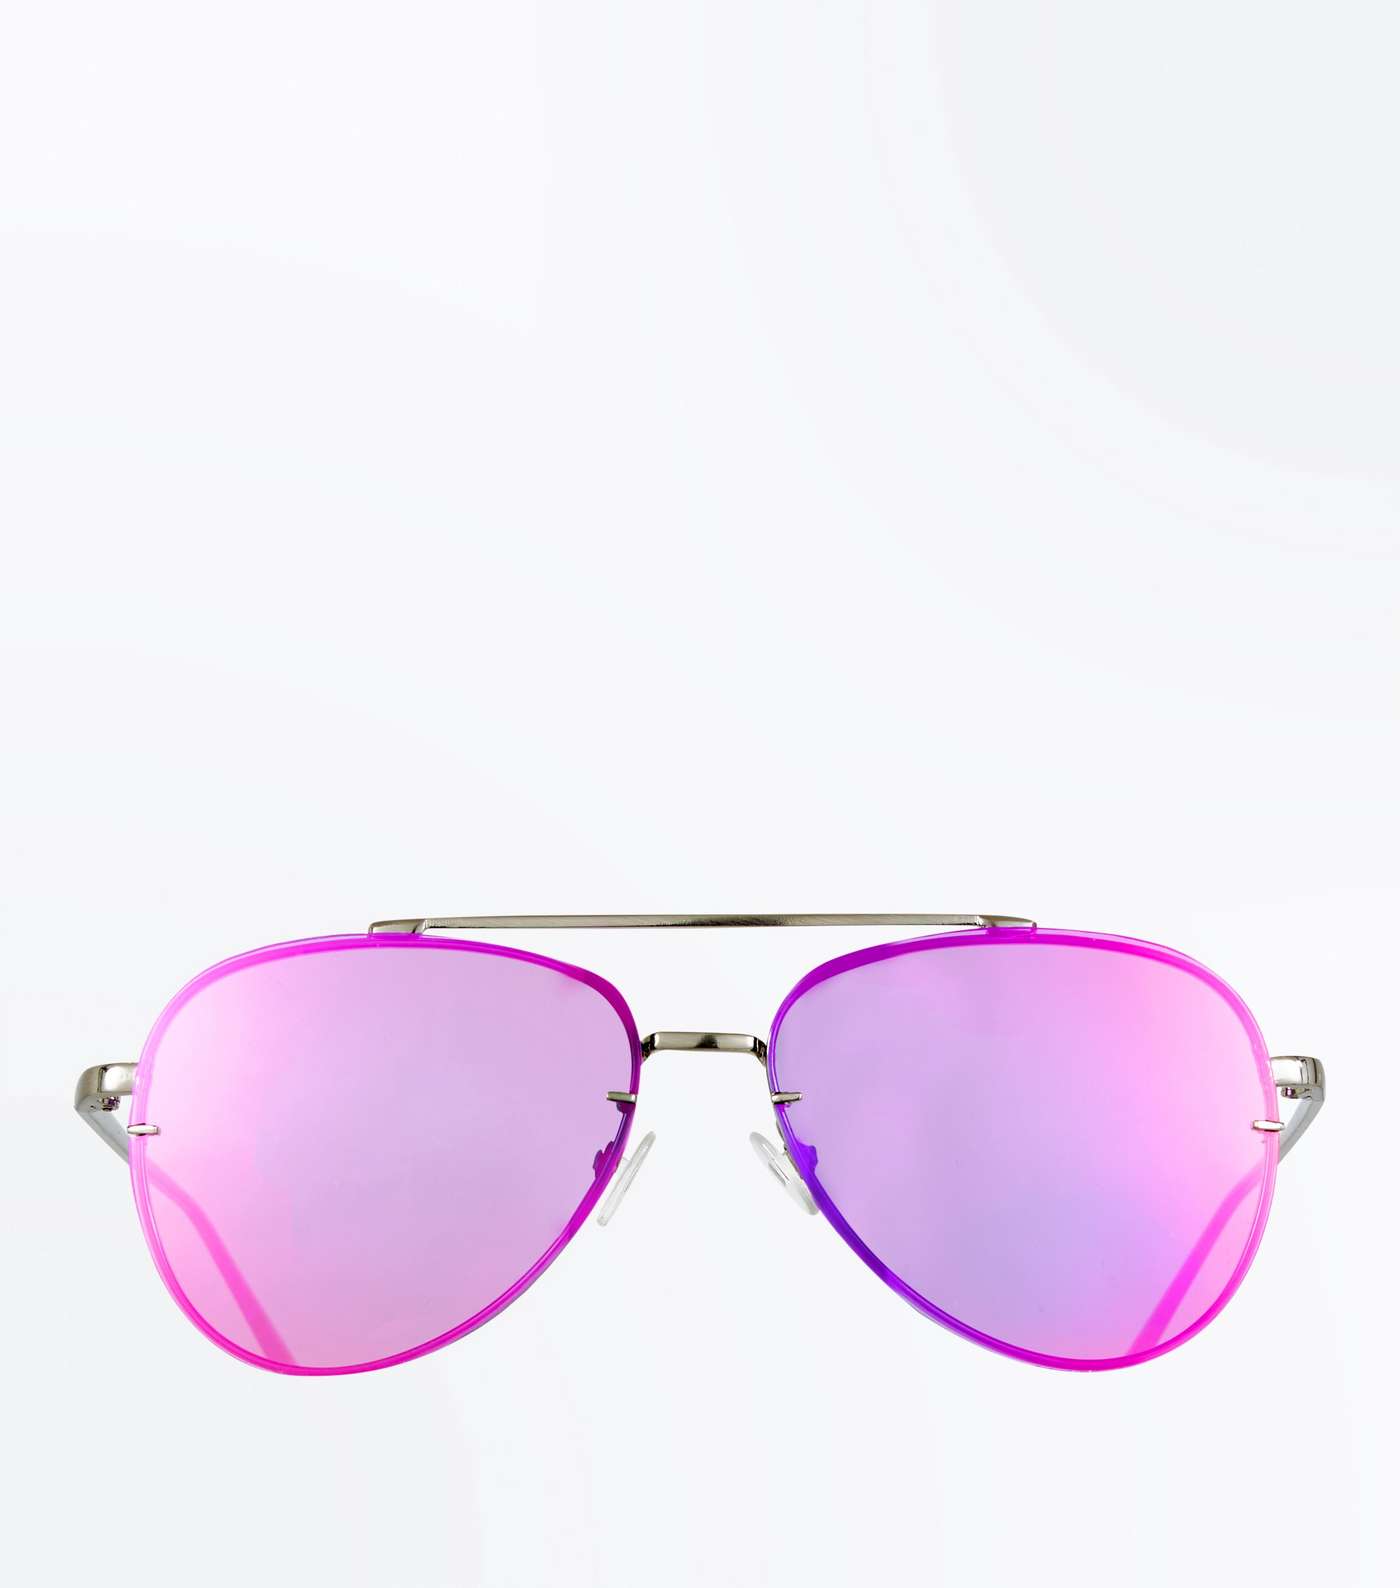 Mid Pink Tinted Aviator Style Sunglasses Image 3